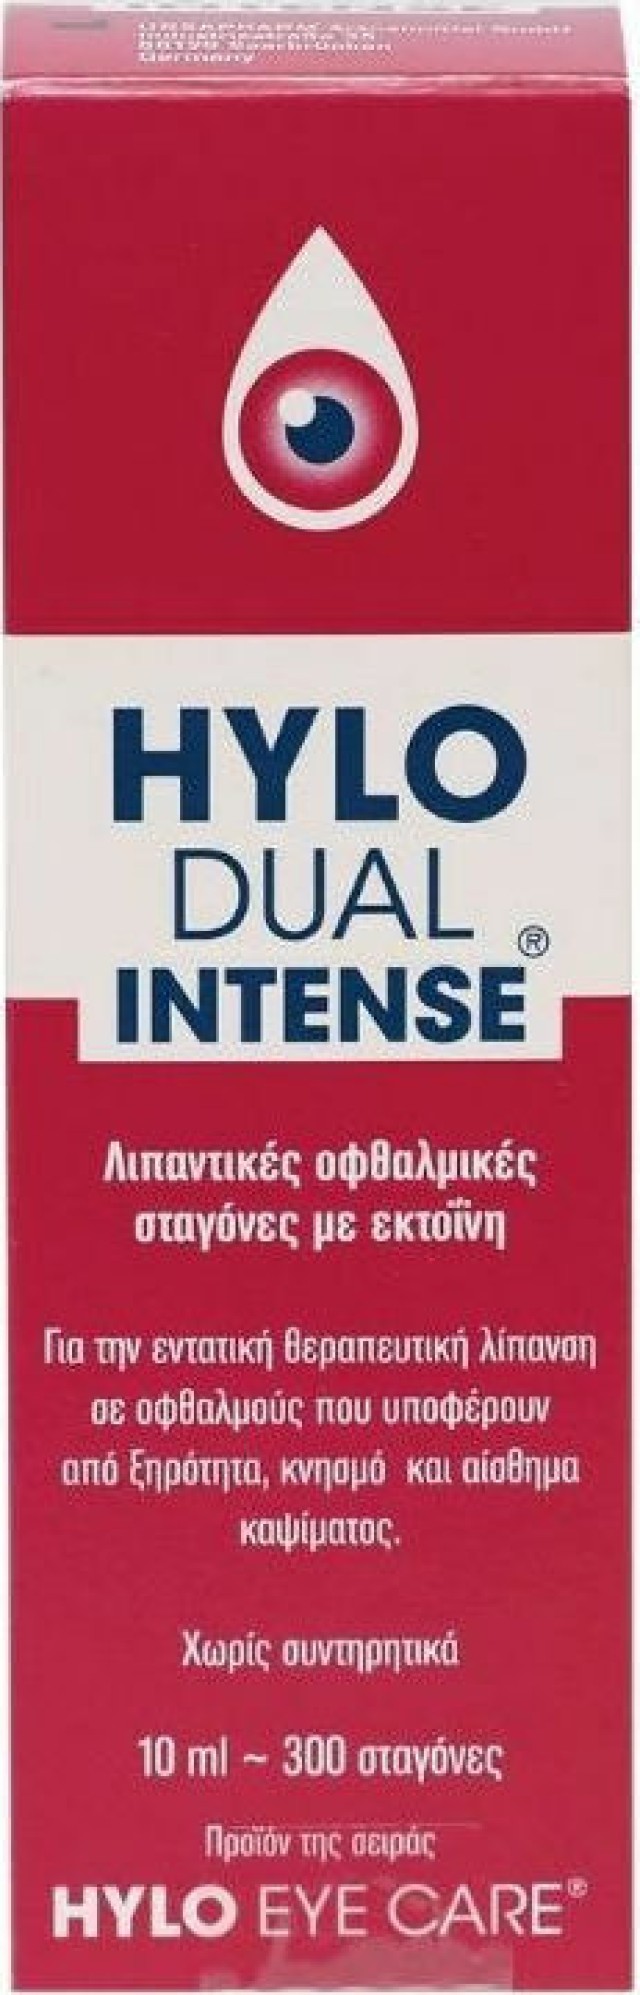 Hylodual Intense Λιπαντικές Οφθαλμικές Σταγόνες με εκτοϊνη 10ml